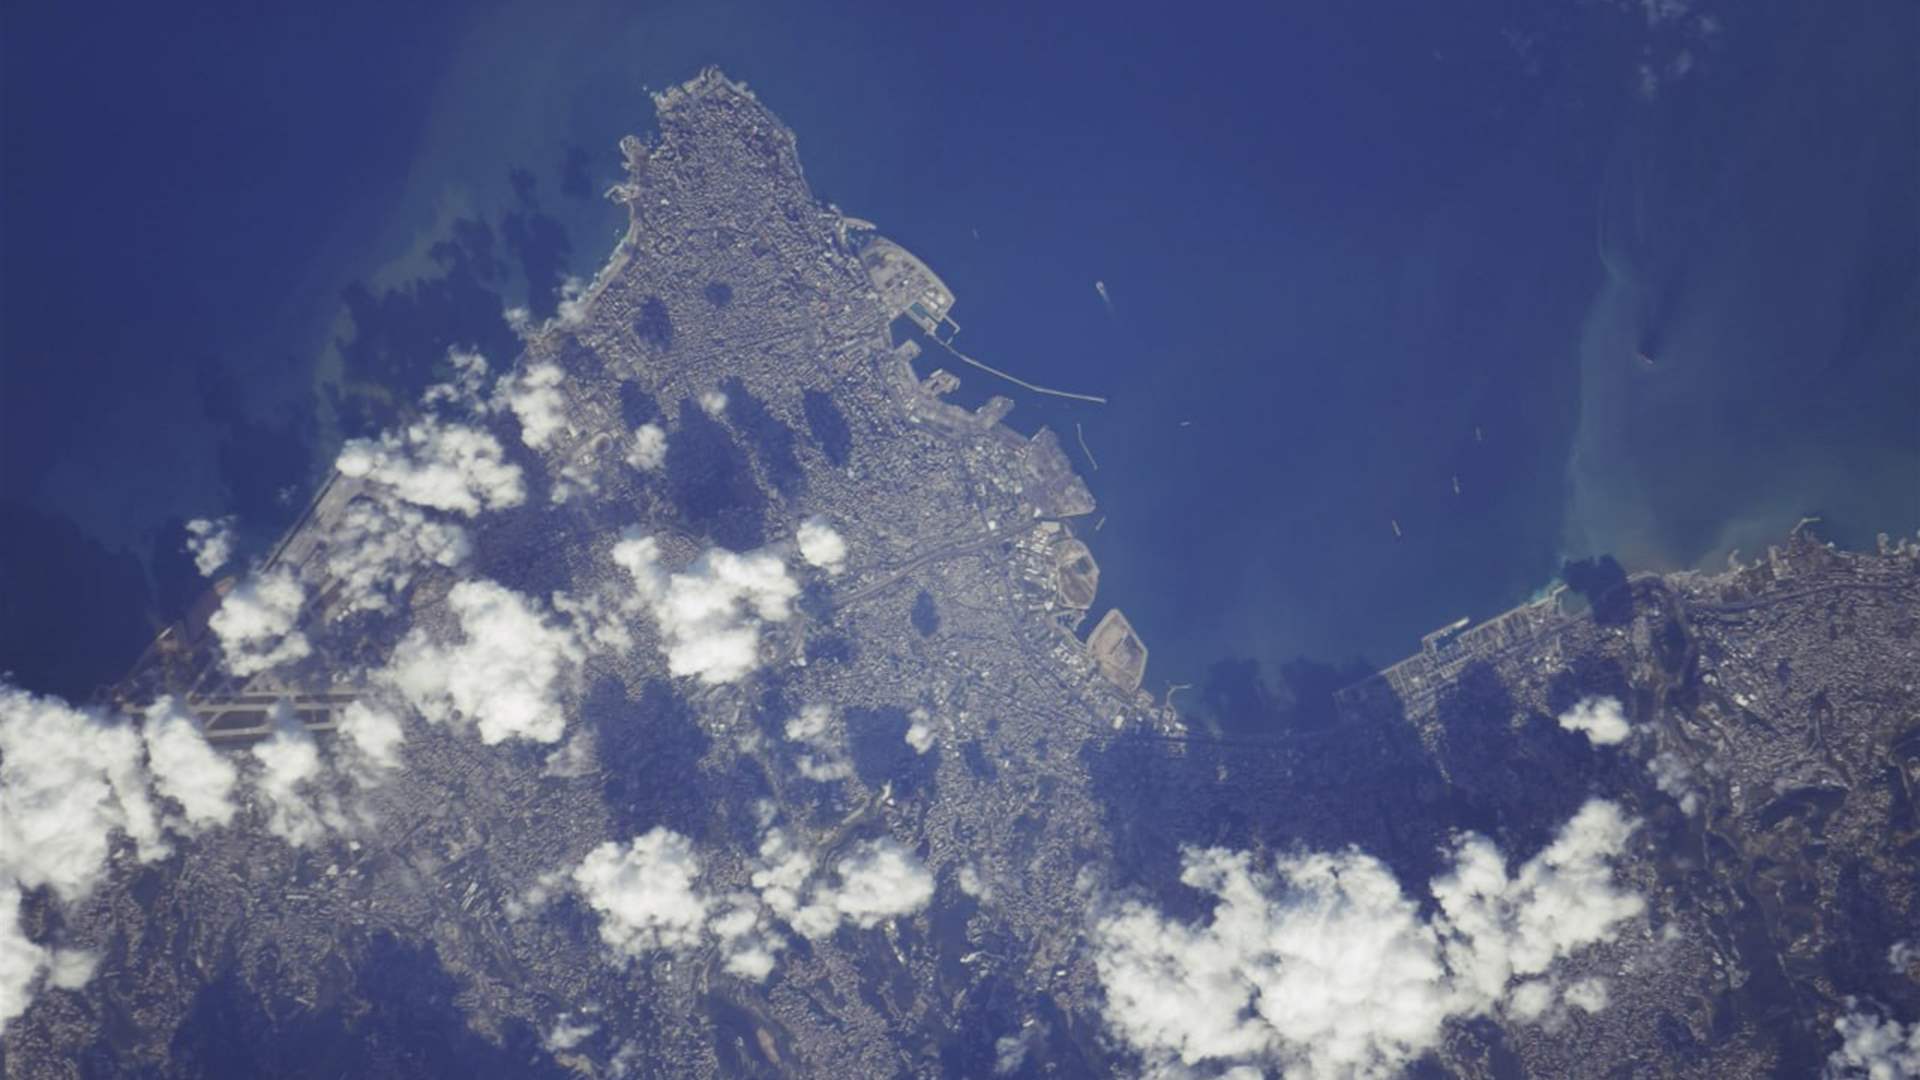 Russian cosmonaut Oleg Artemiev shares photo of Beirut from ISS